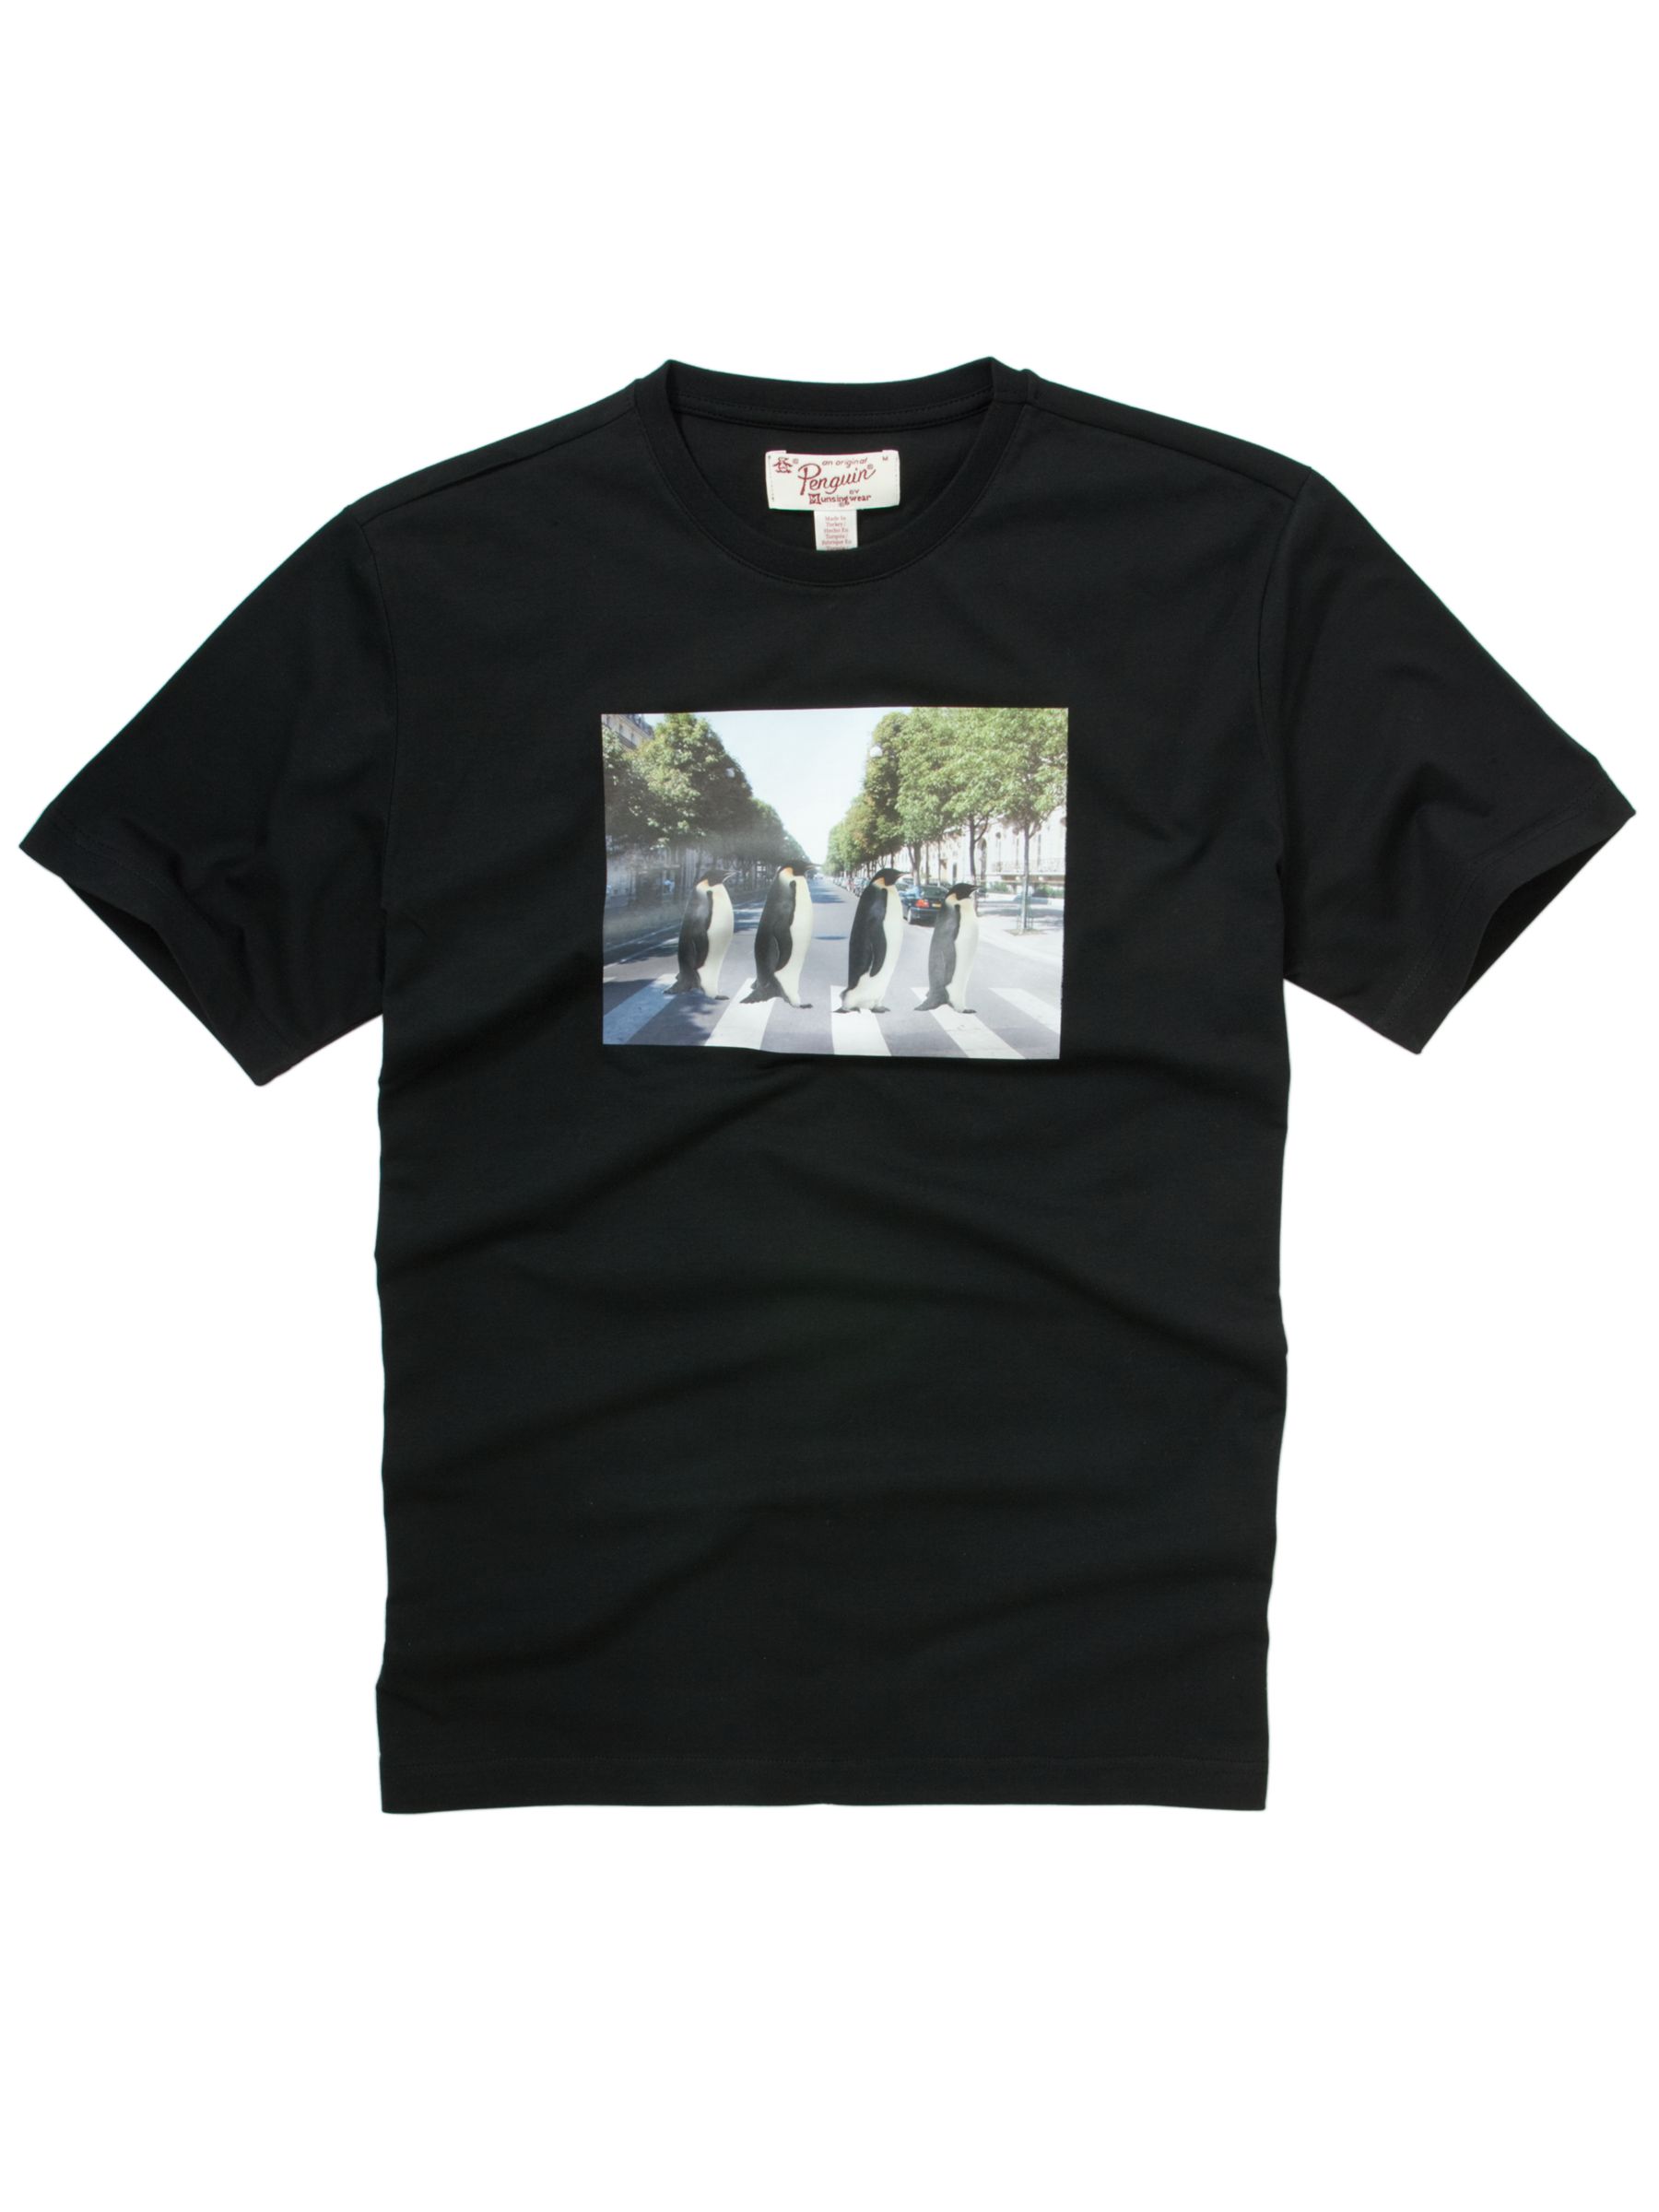 Original Penguin Abbey Road Penguin T-Shirt, Black